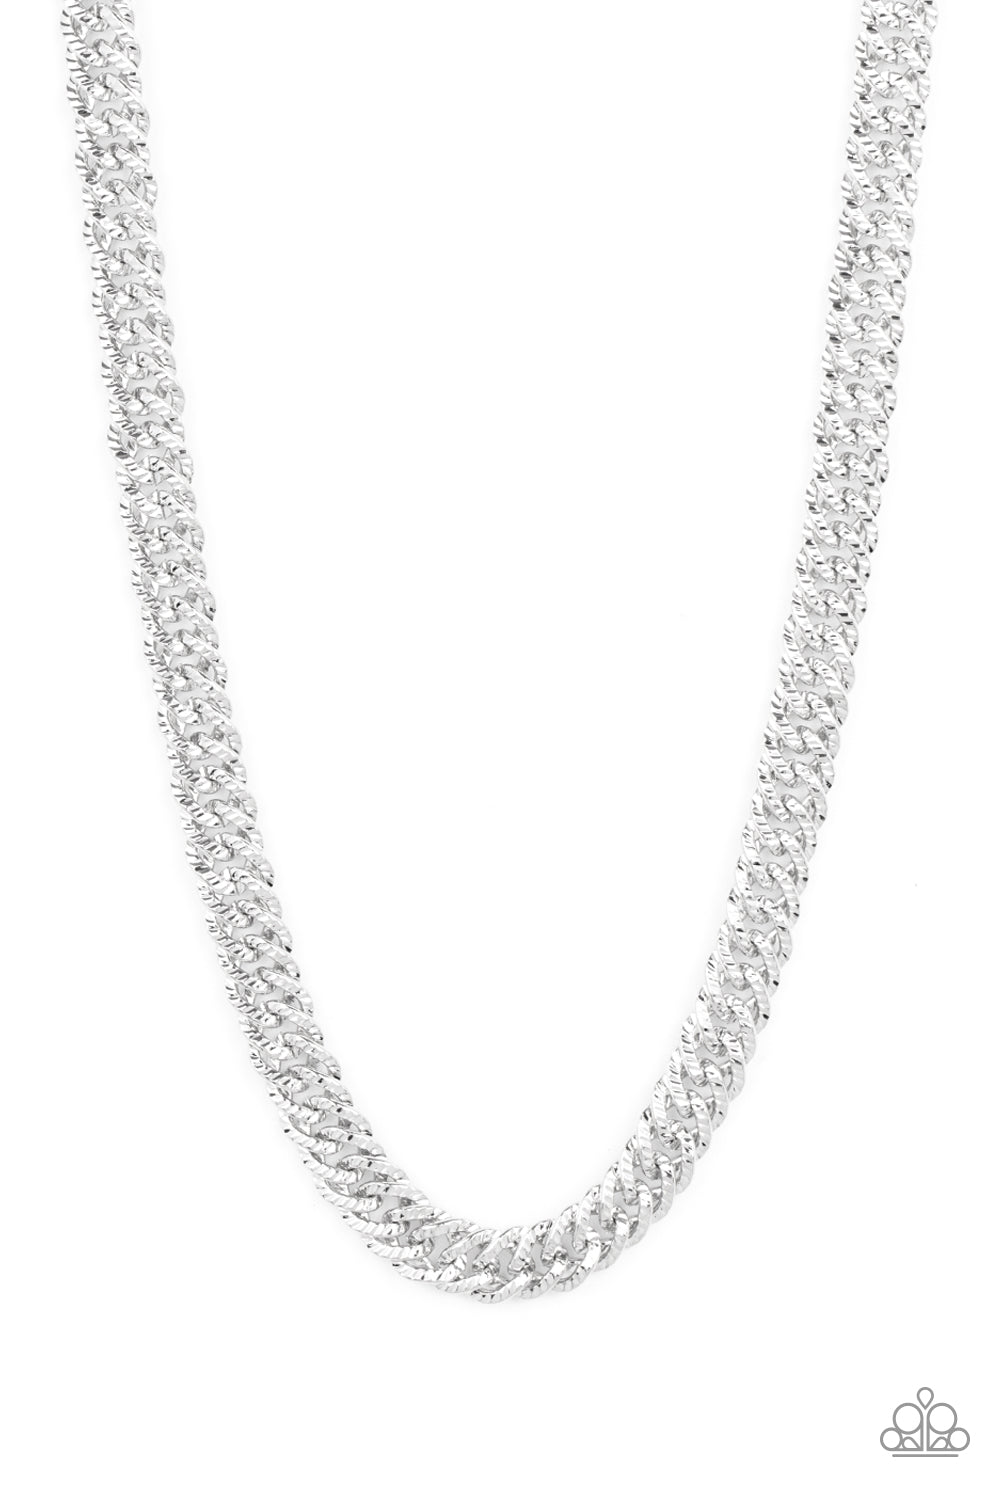 Urban Uppercut - Silver Necklace - Paparazzi - Dare2bdazzlin N Jewelry